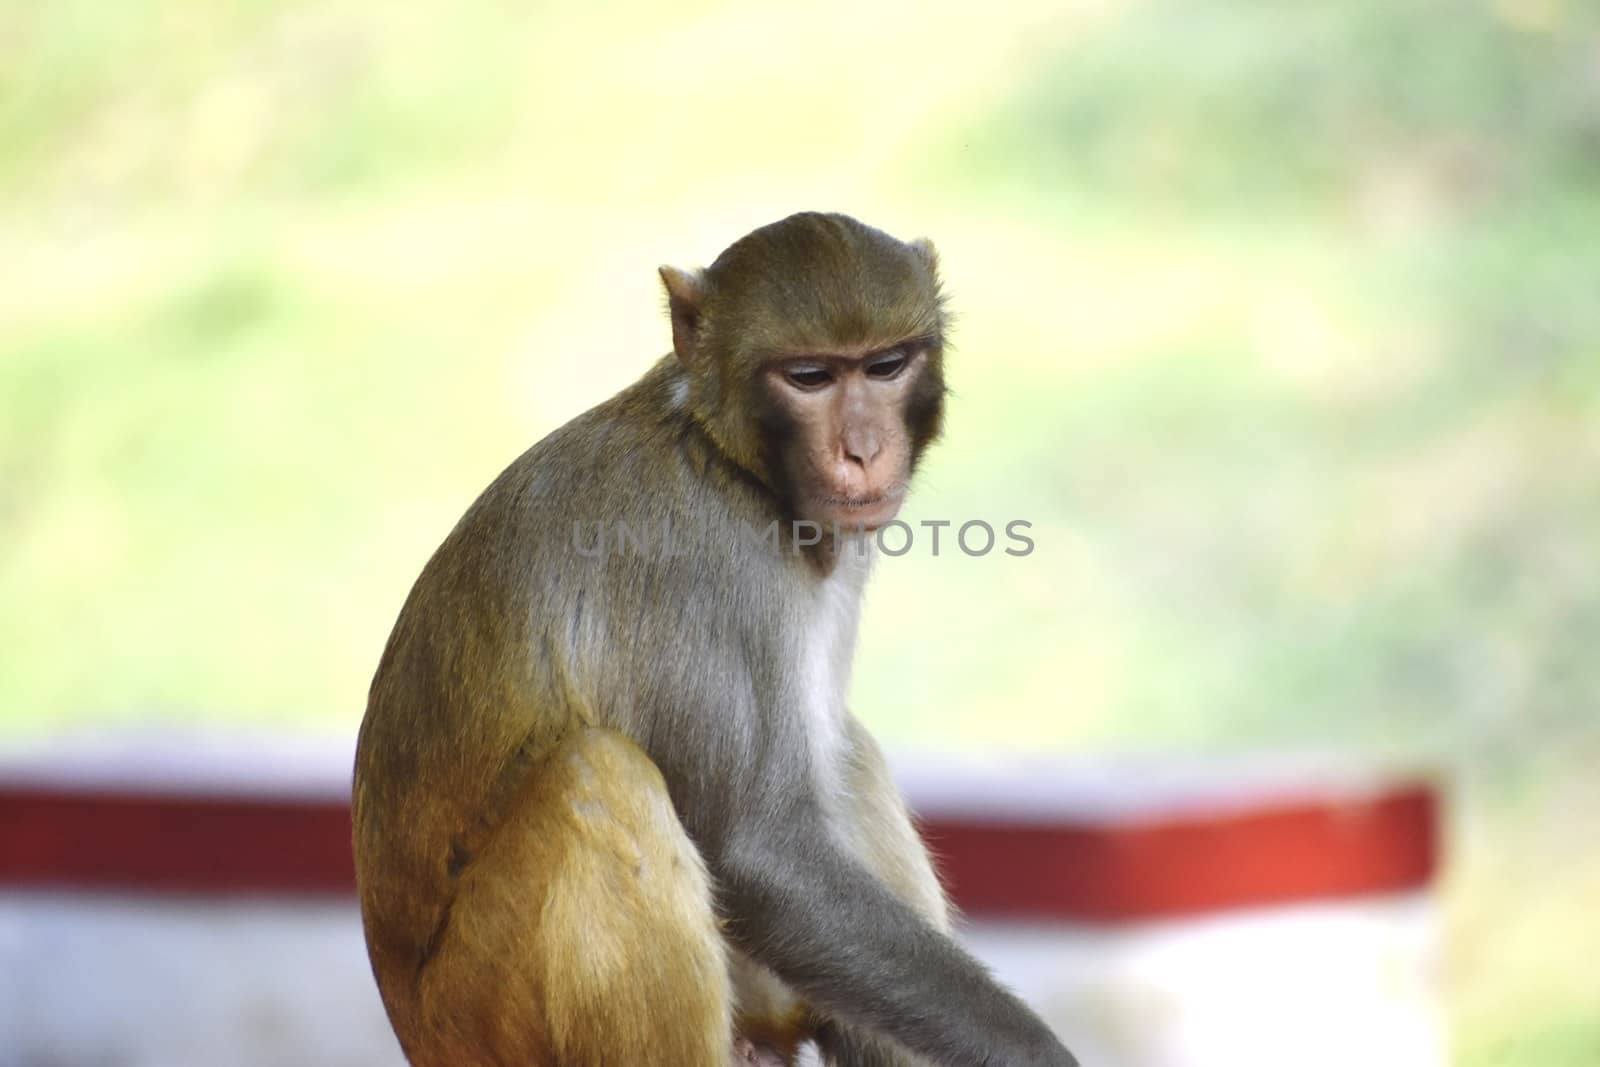 A Monkey by ravindrabhu165165@gmail.com